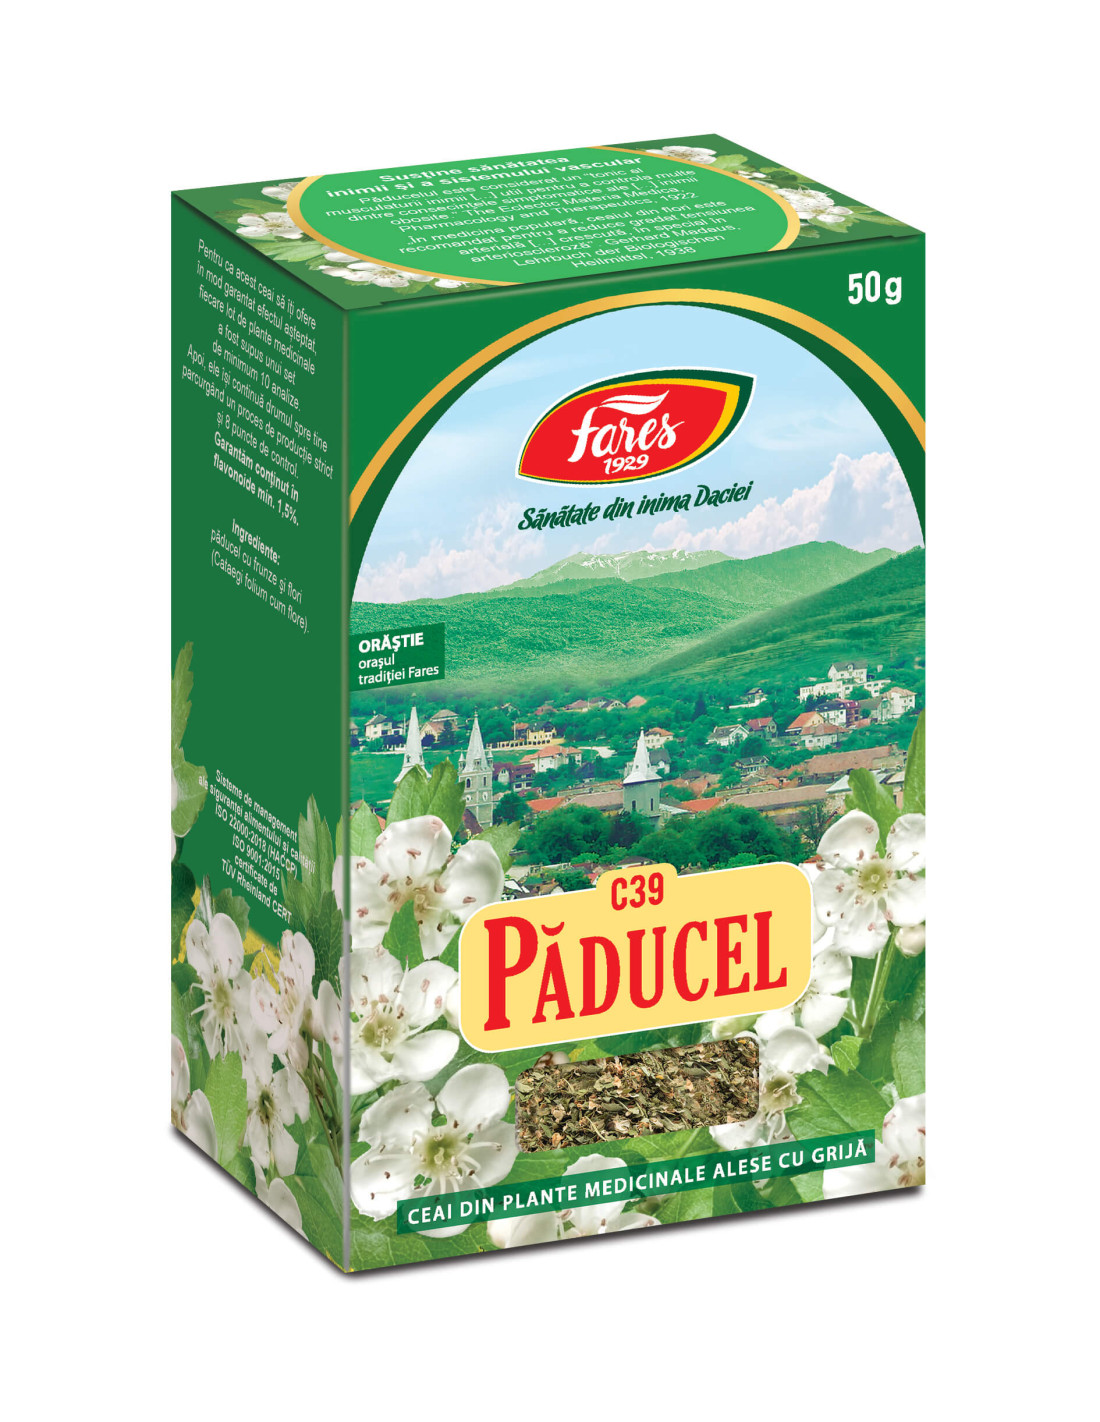 Ceaiuri - Ceai Paducel, 50 g, Fares, farmacieieftina.ro